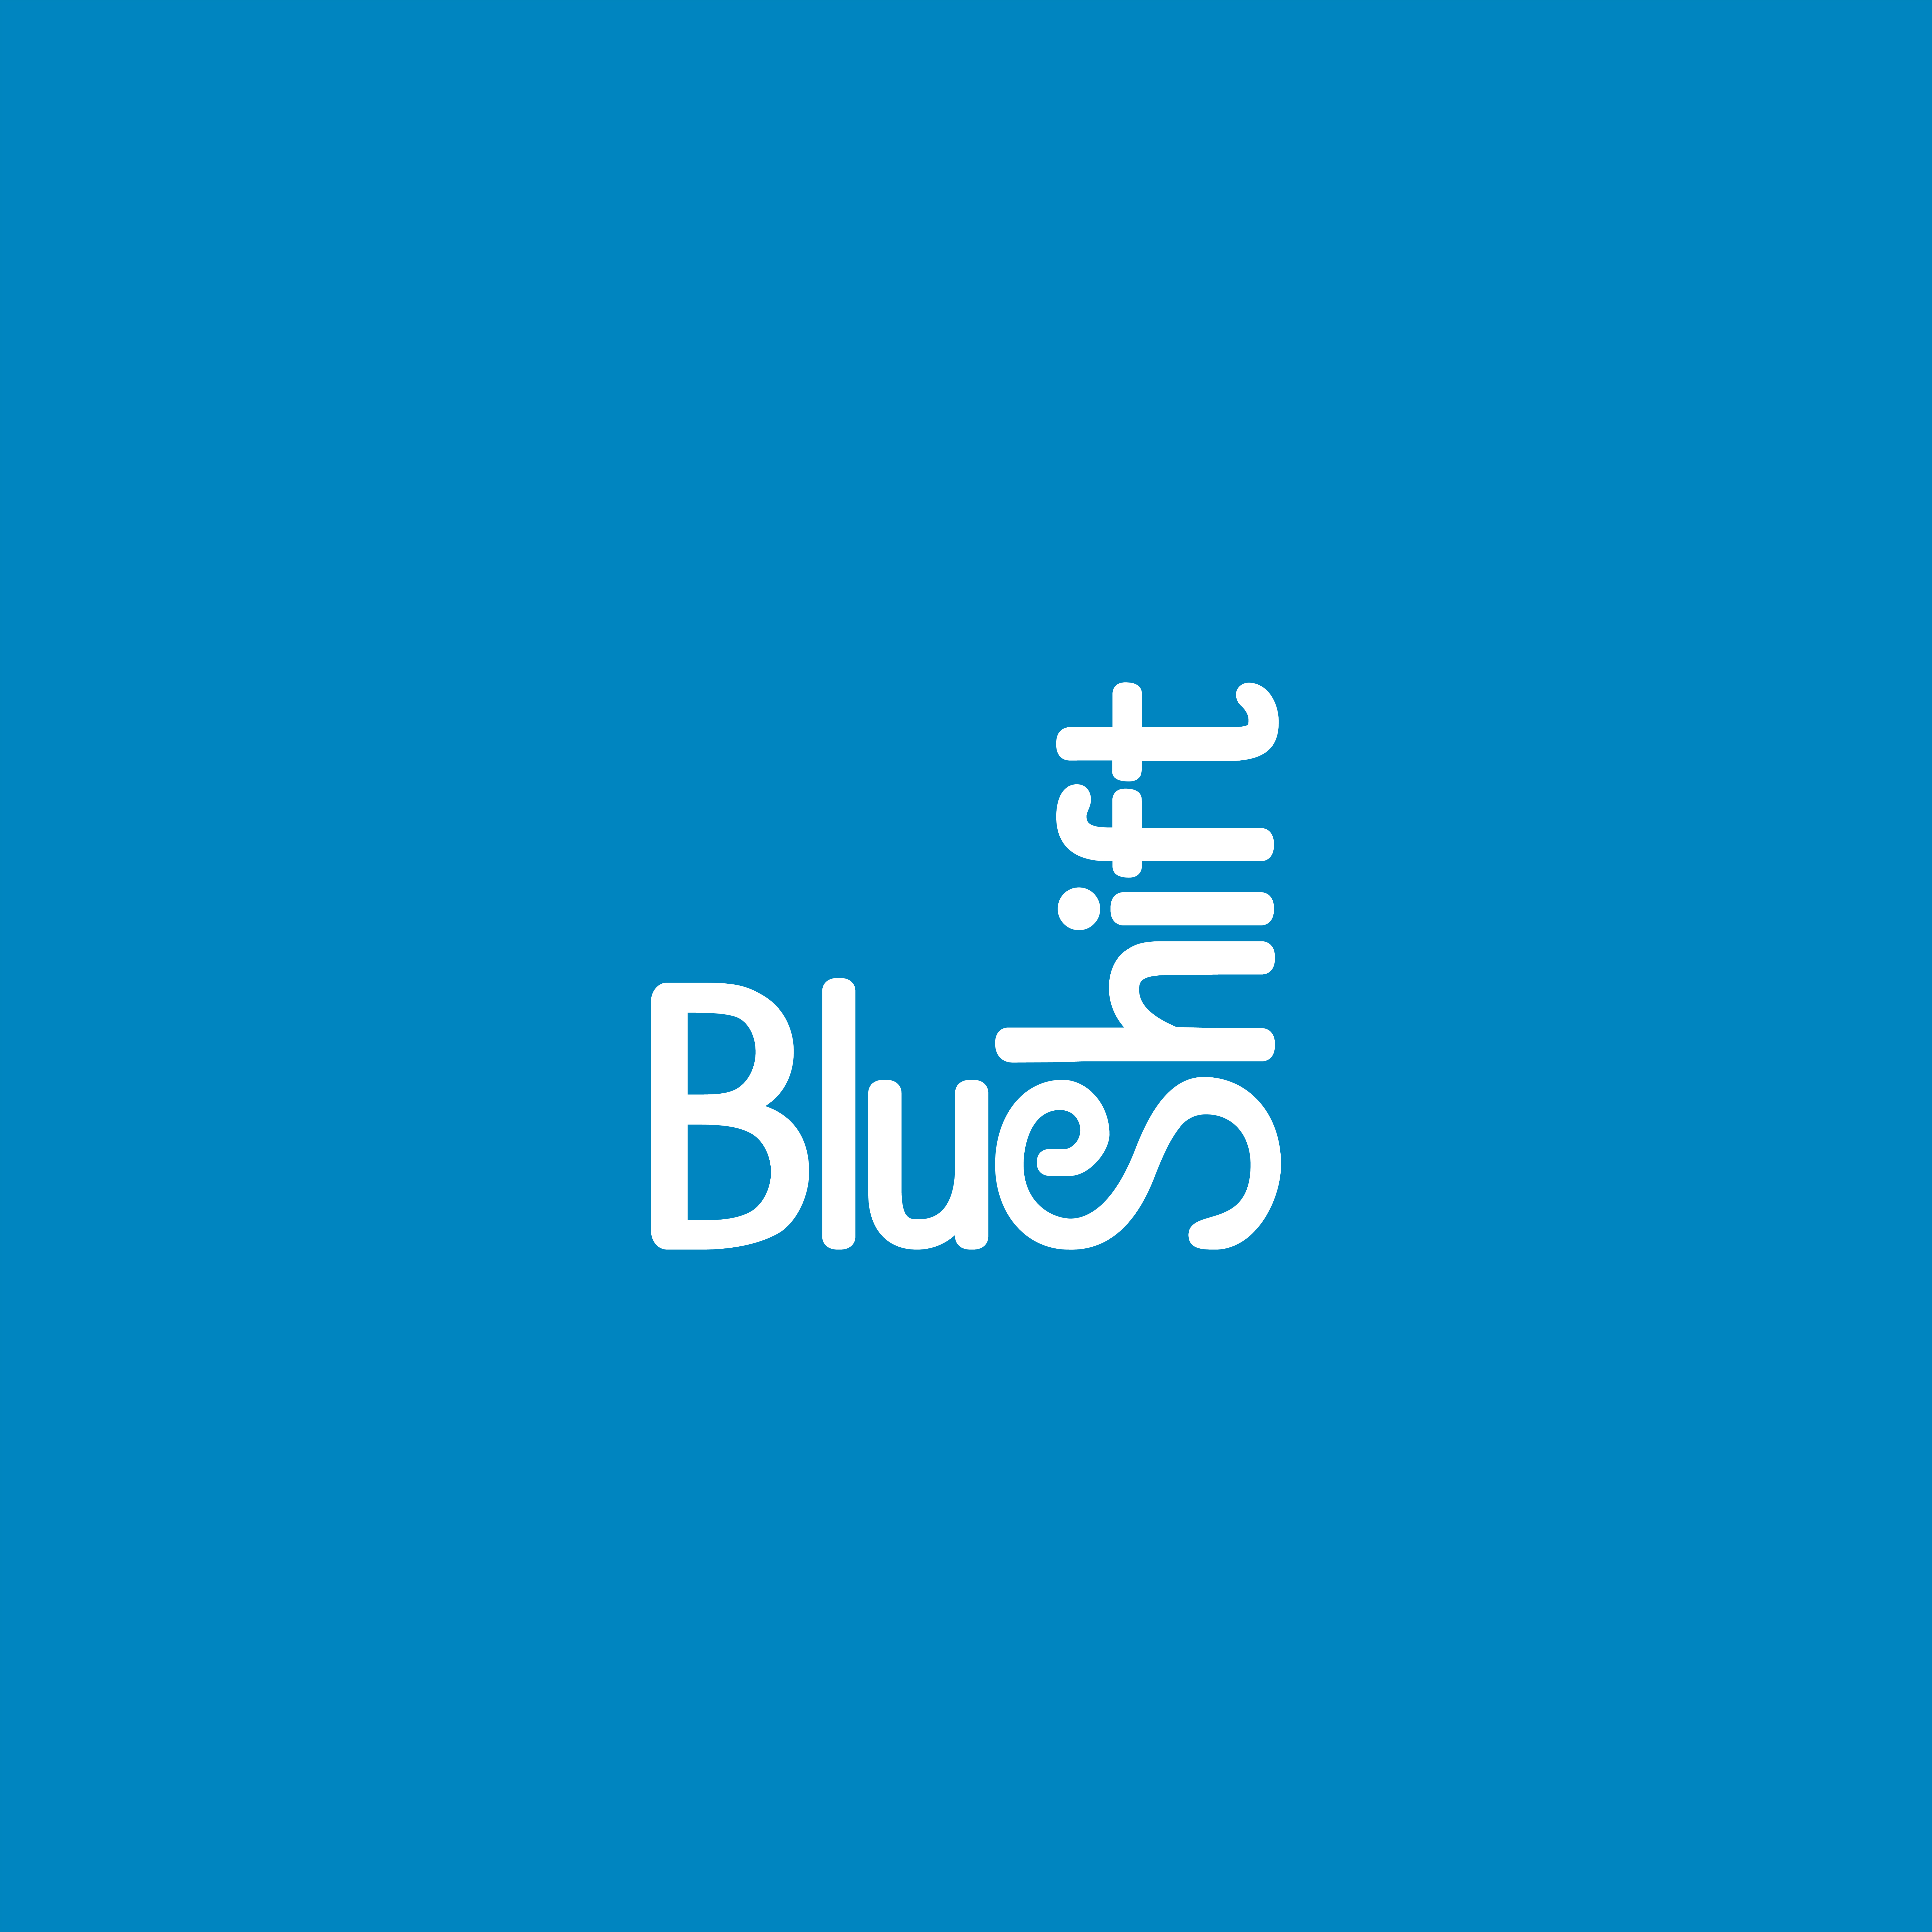 BlueShift logo in white on a blue background.